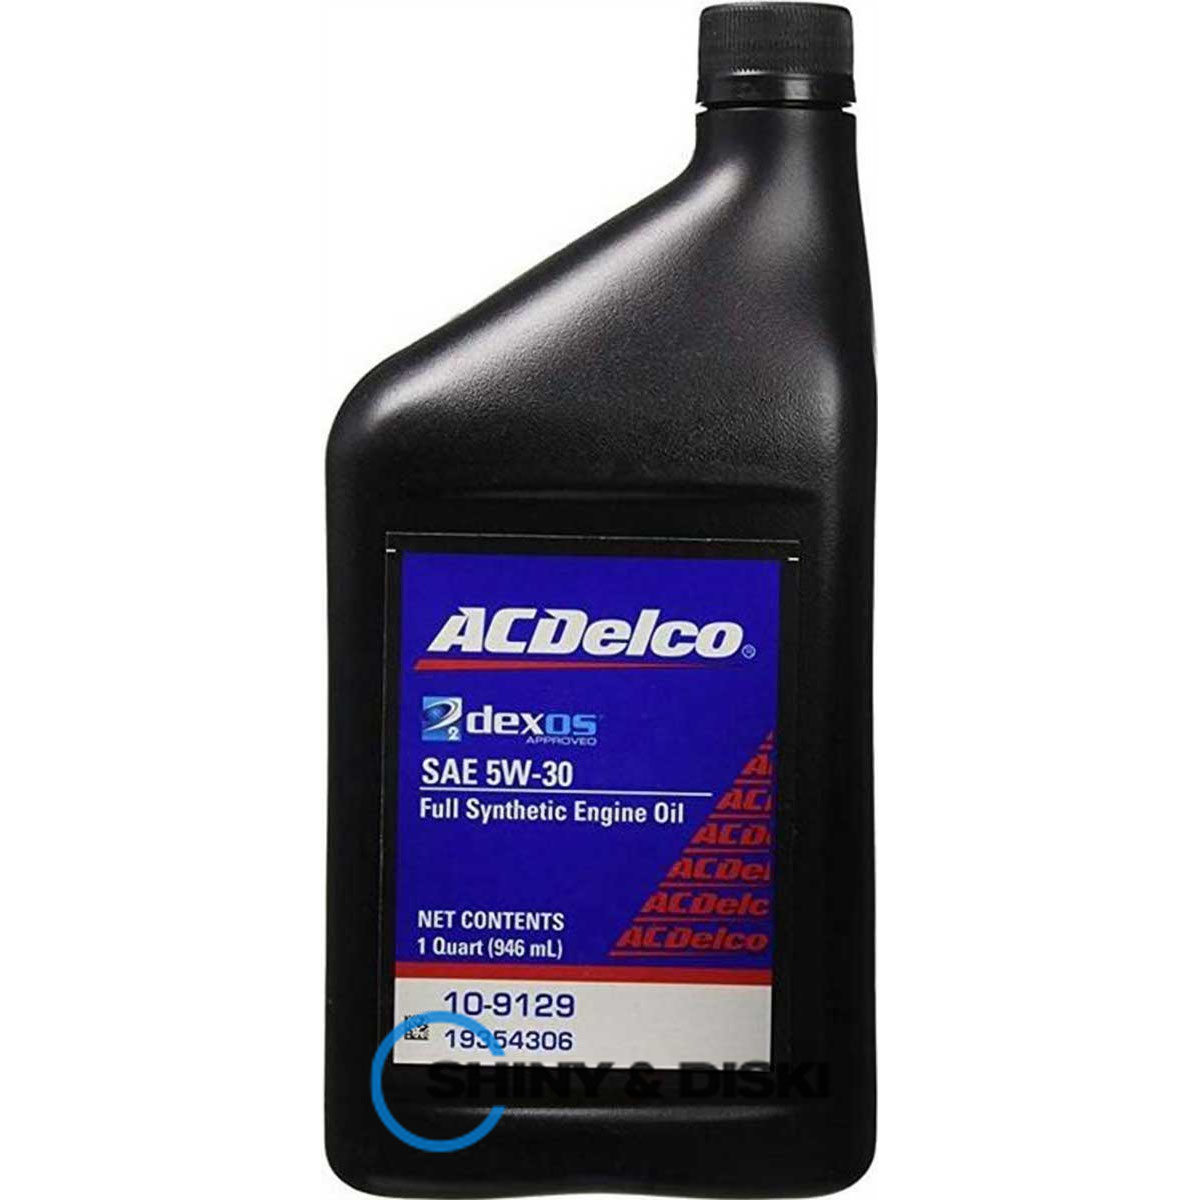 acdelco dexos2 full synthetic